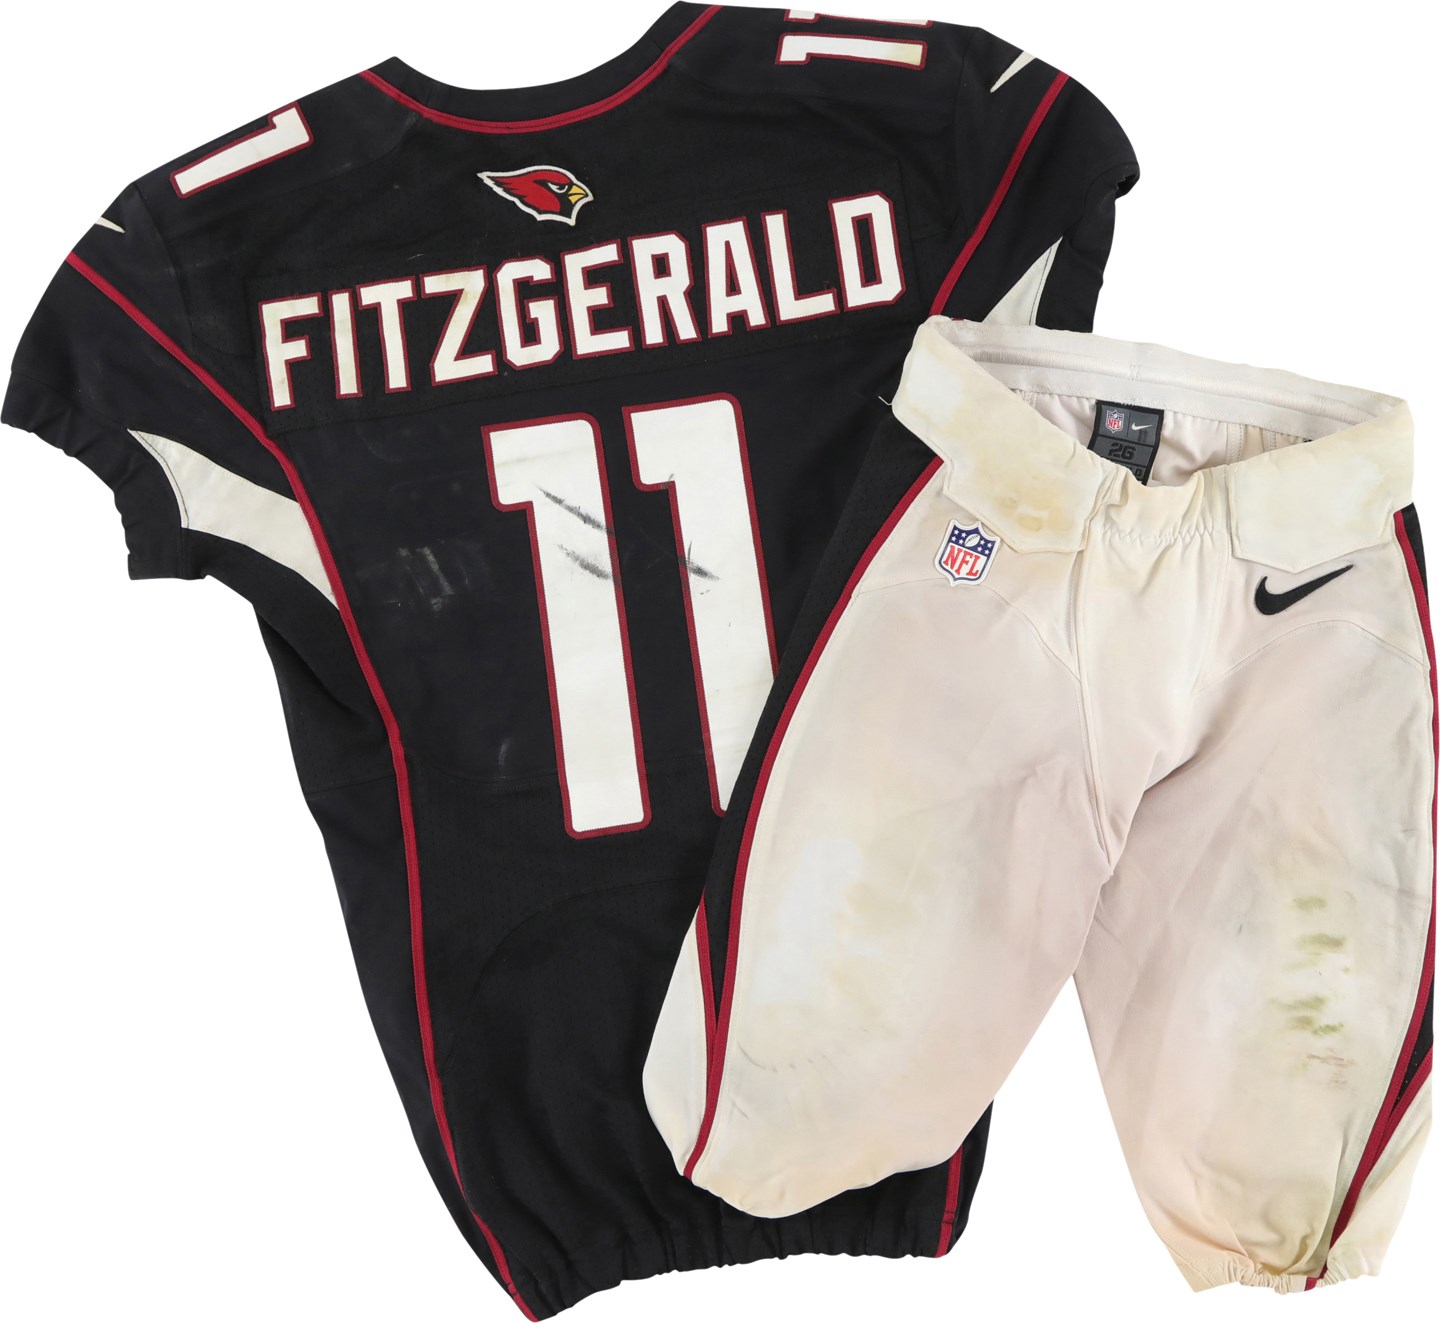 - 9/23/12 Larry Fitzgerald Arizona Cardinals 700th Reception Game Worn Uniform (Davious Photo-Matched LOA)